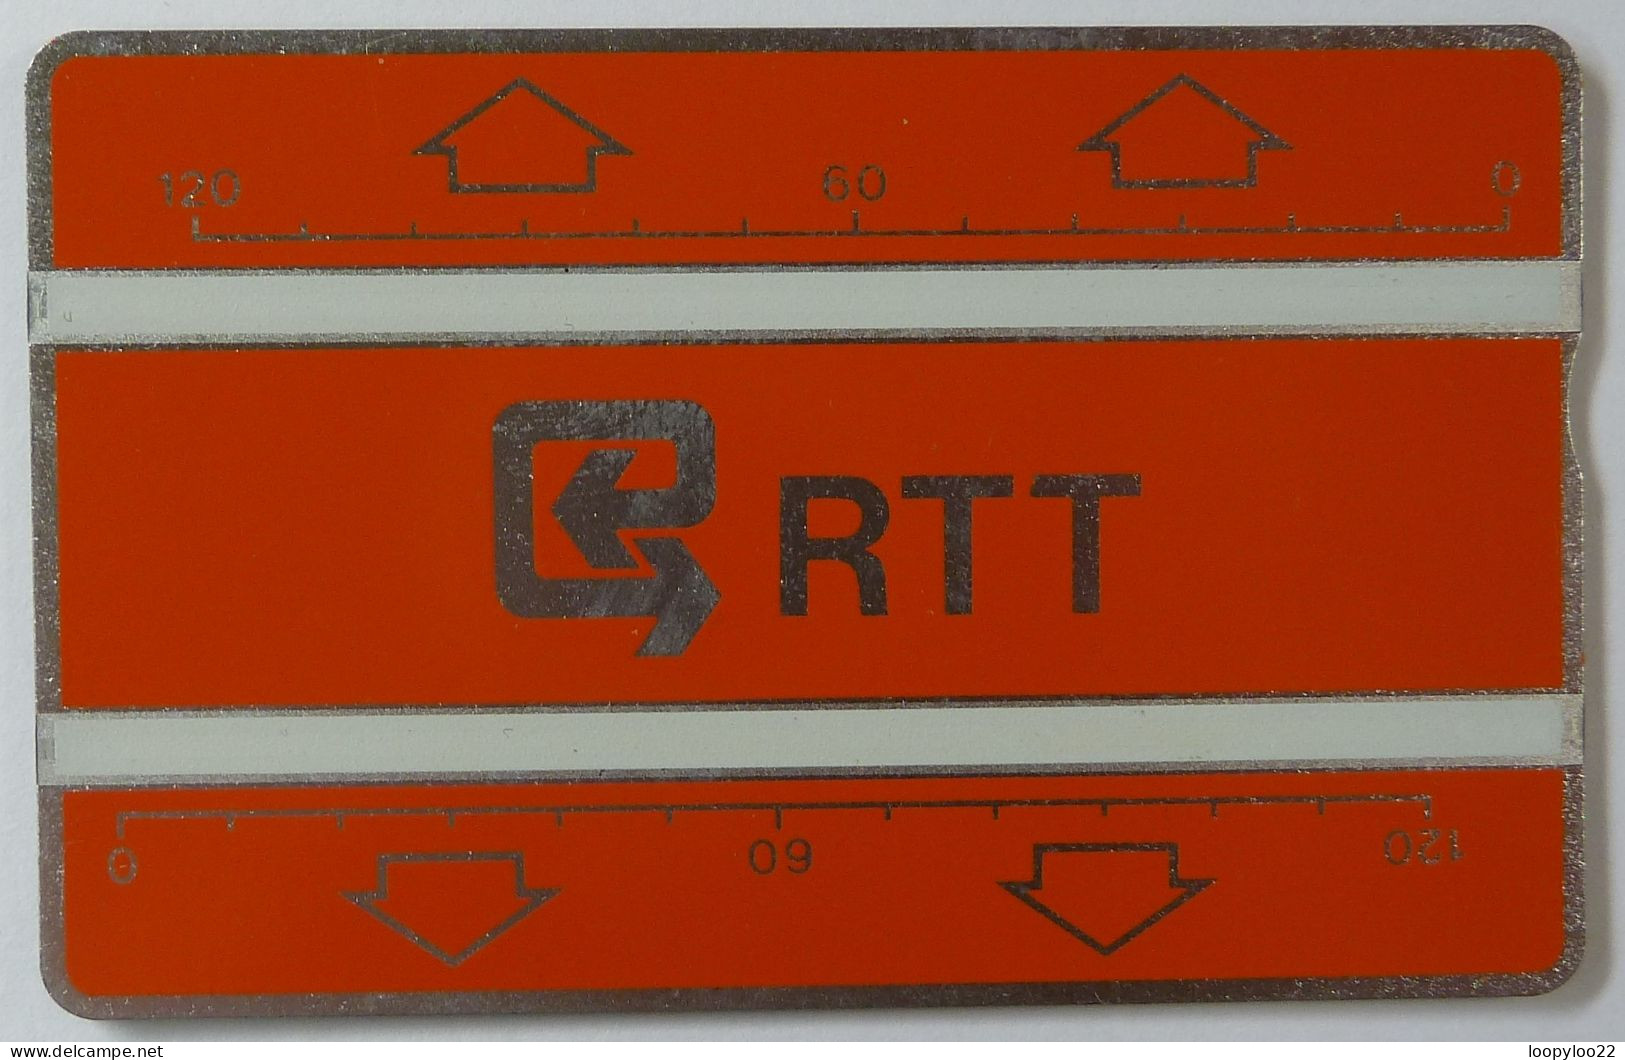 BELGIUM - L&G - RTT - Service -1989 -  240 Units - 903S - Mint - [3] Tests & Services